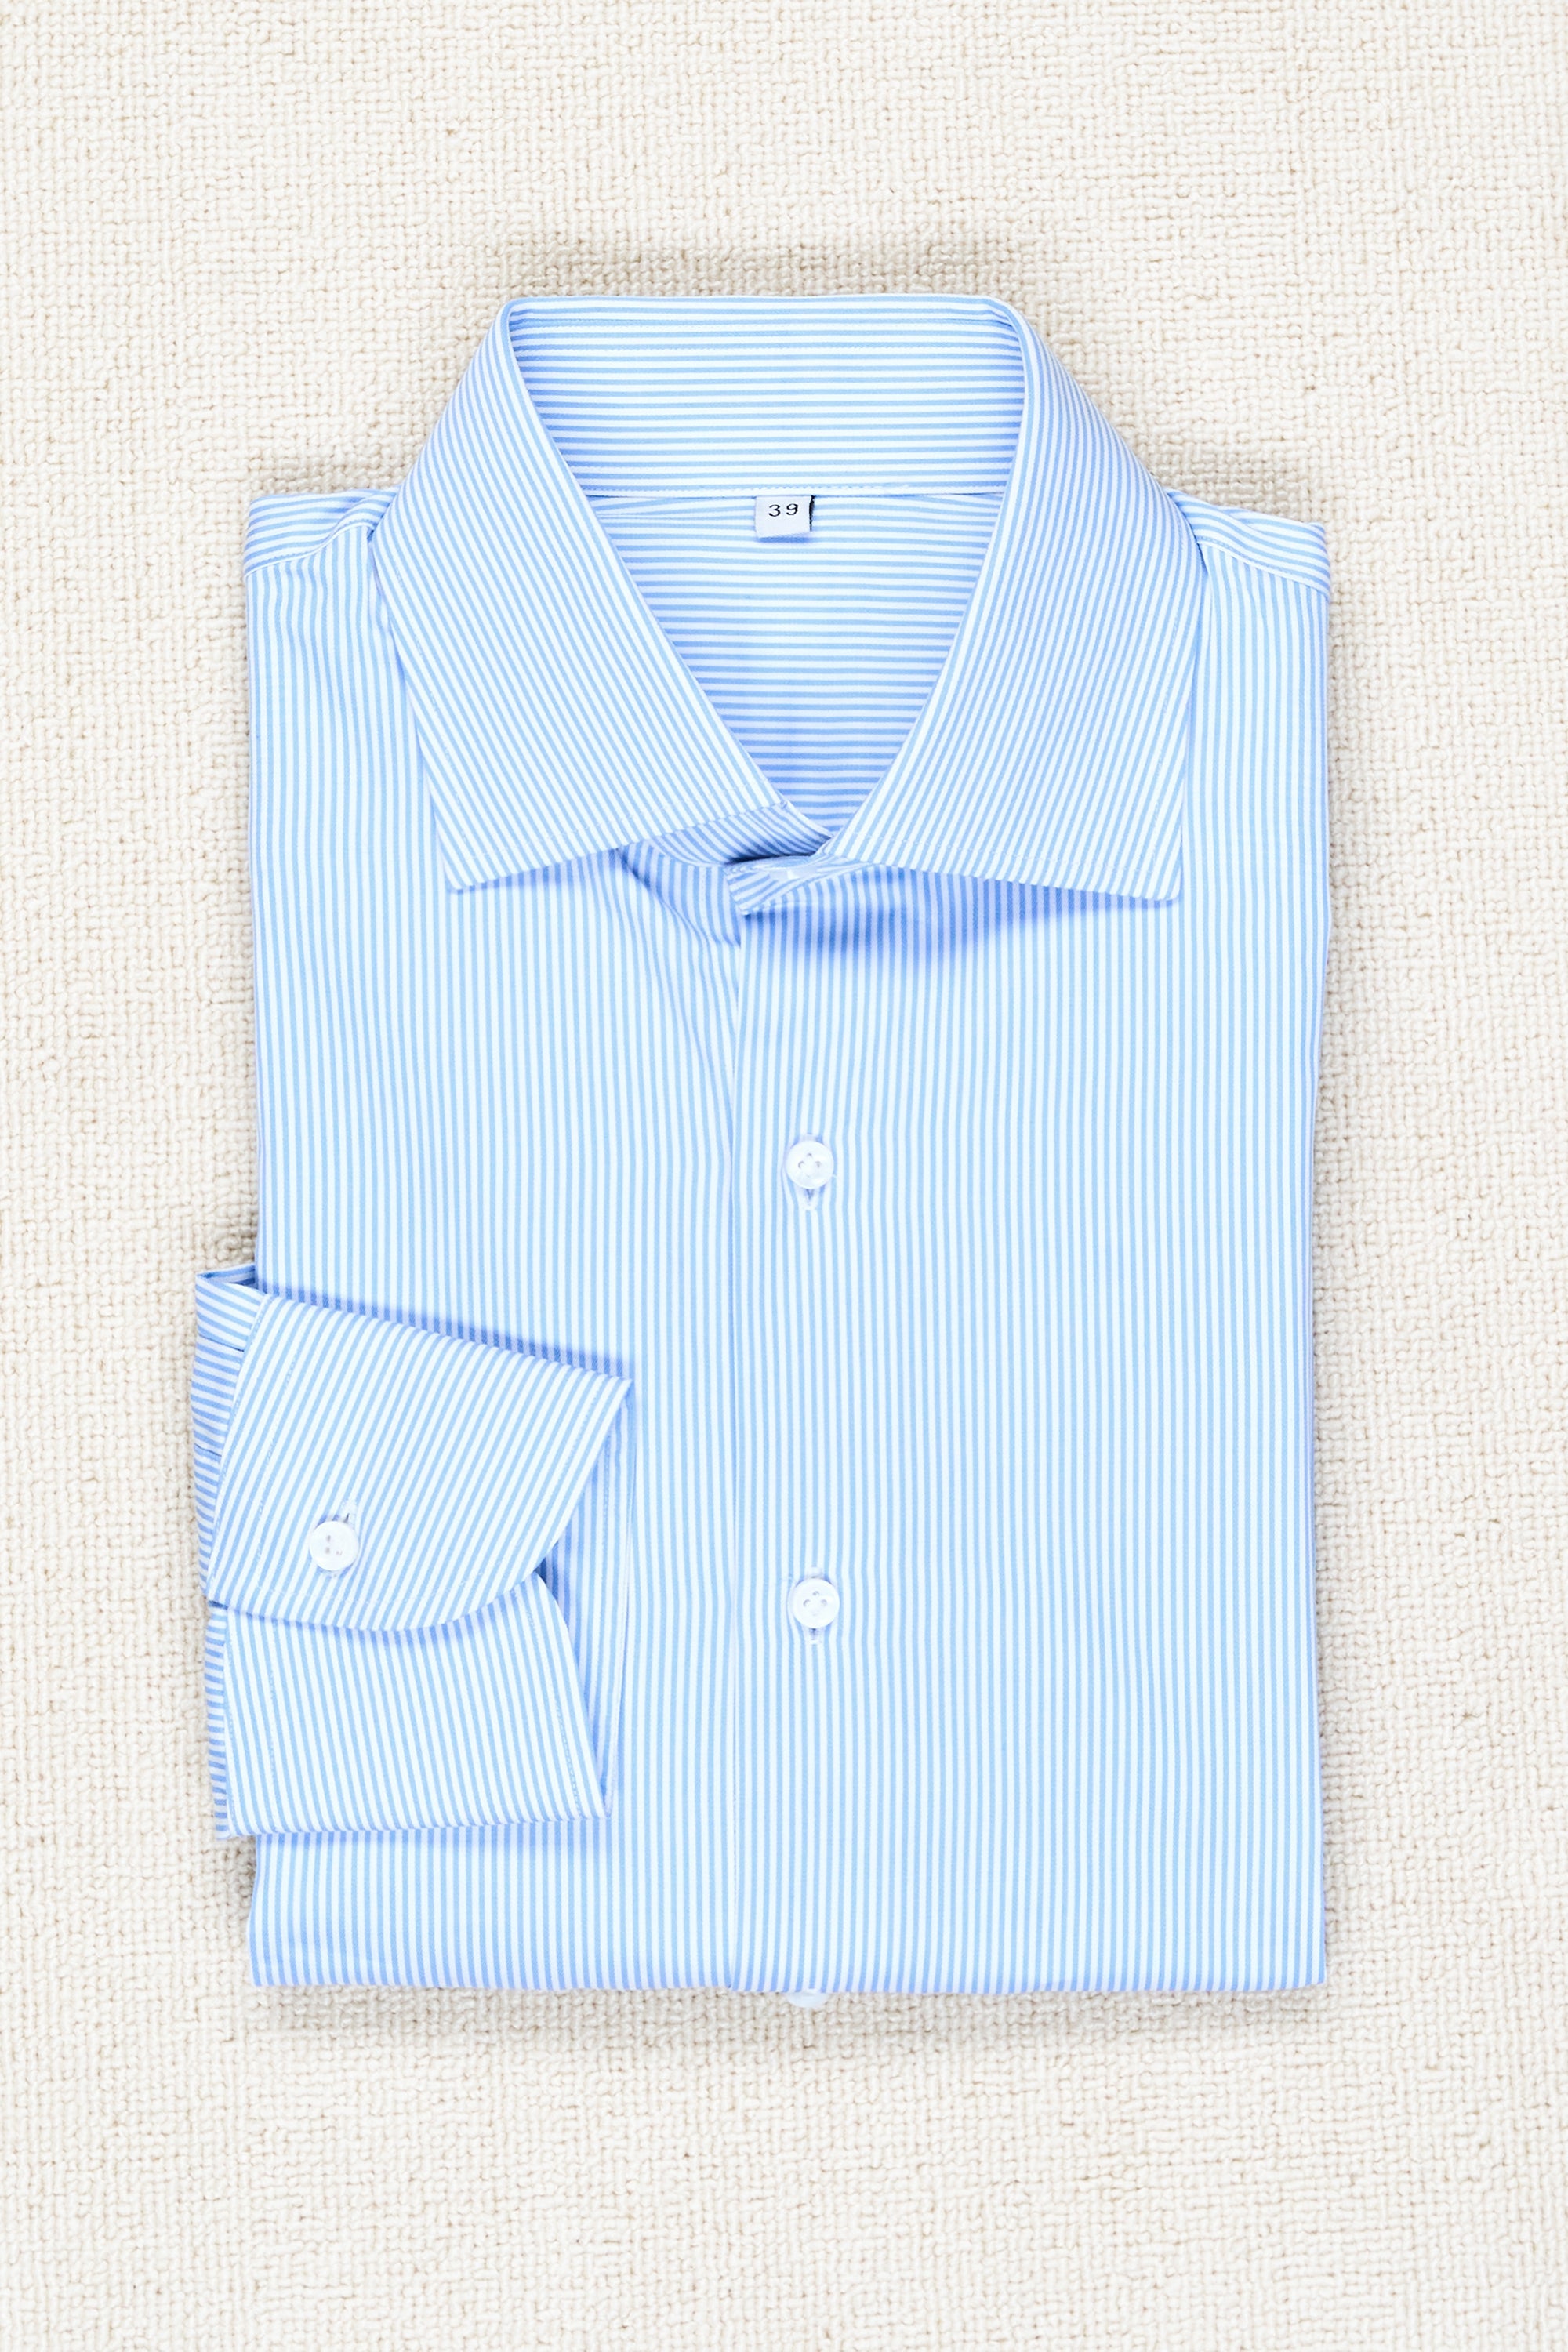 P. Johnson Sky Blue Stripe Cotton Twill Spread Collar Shirt